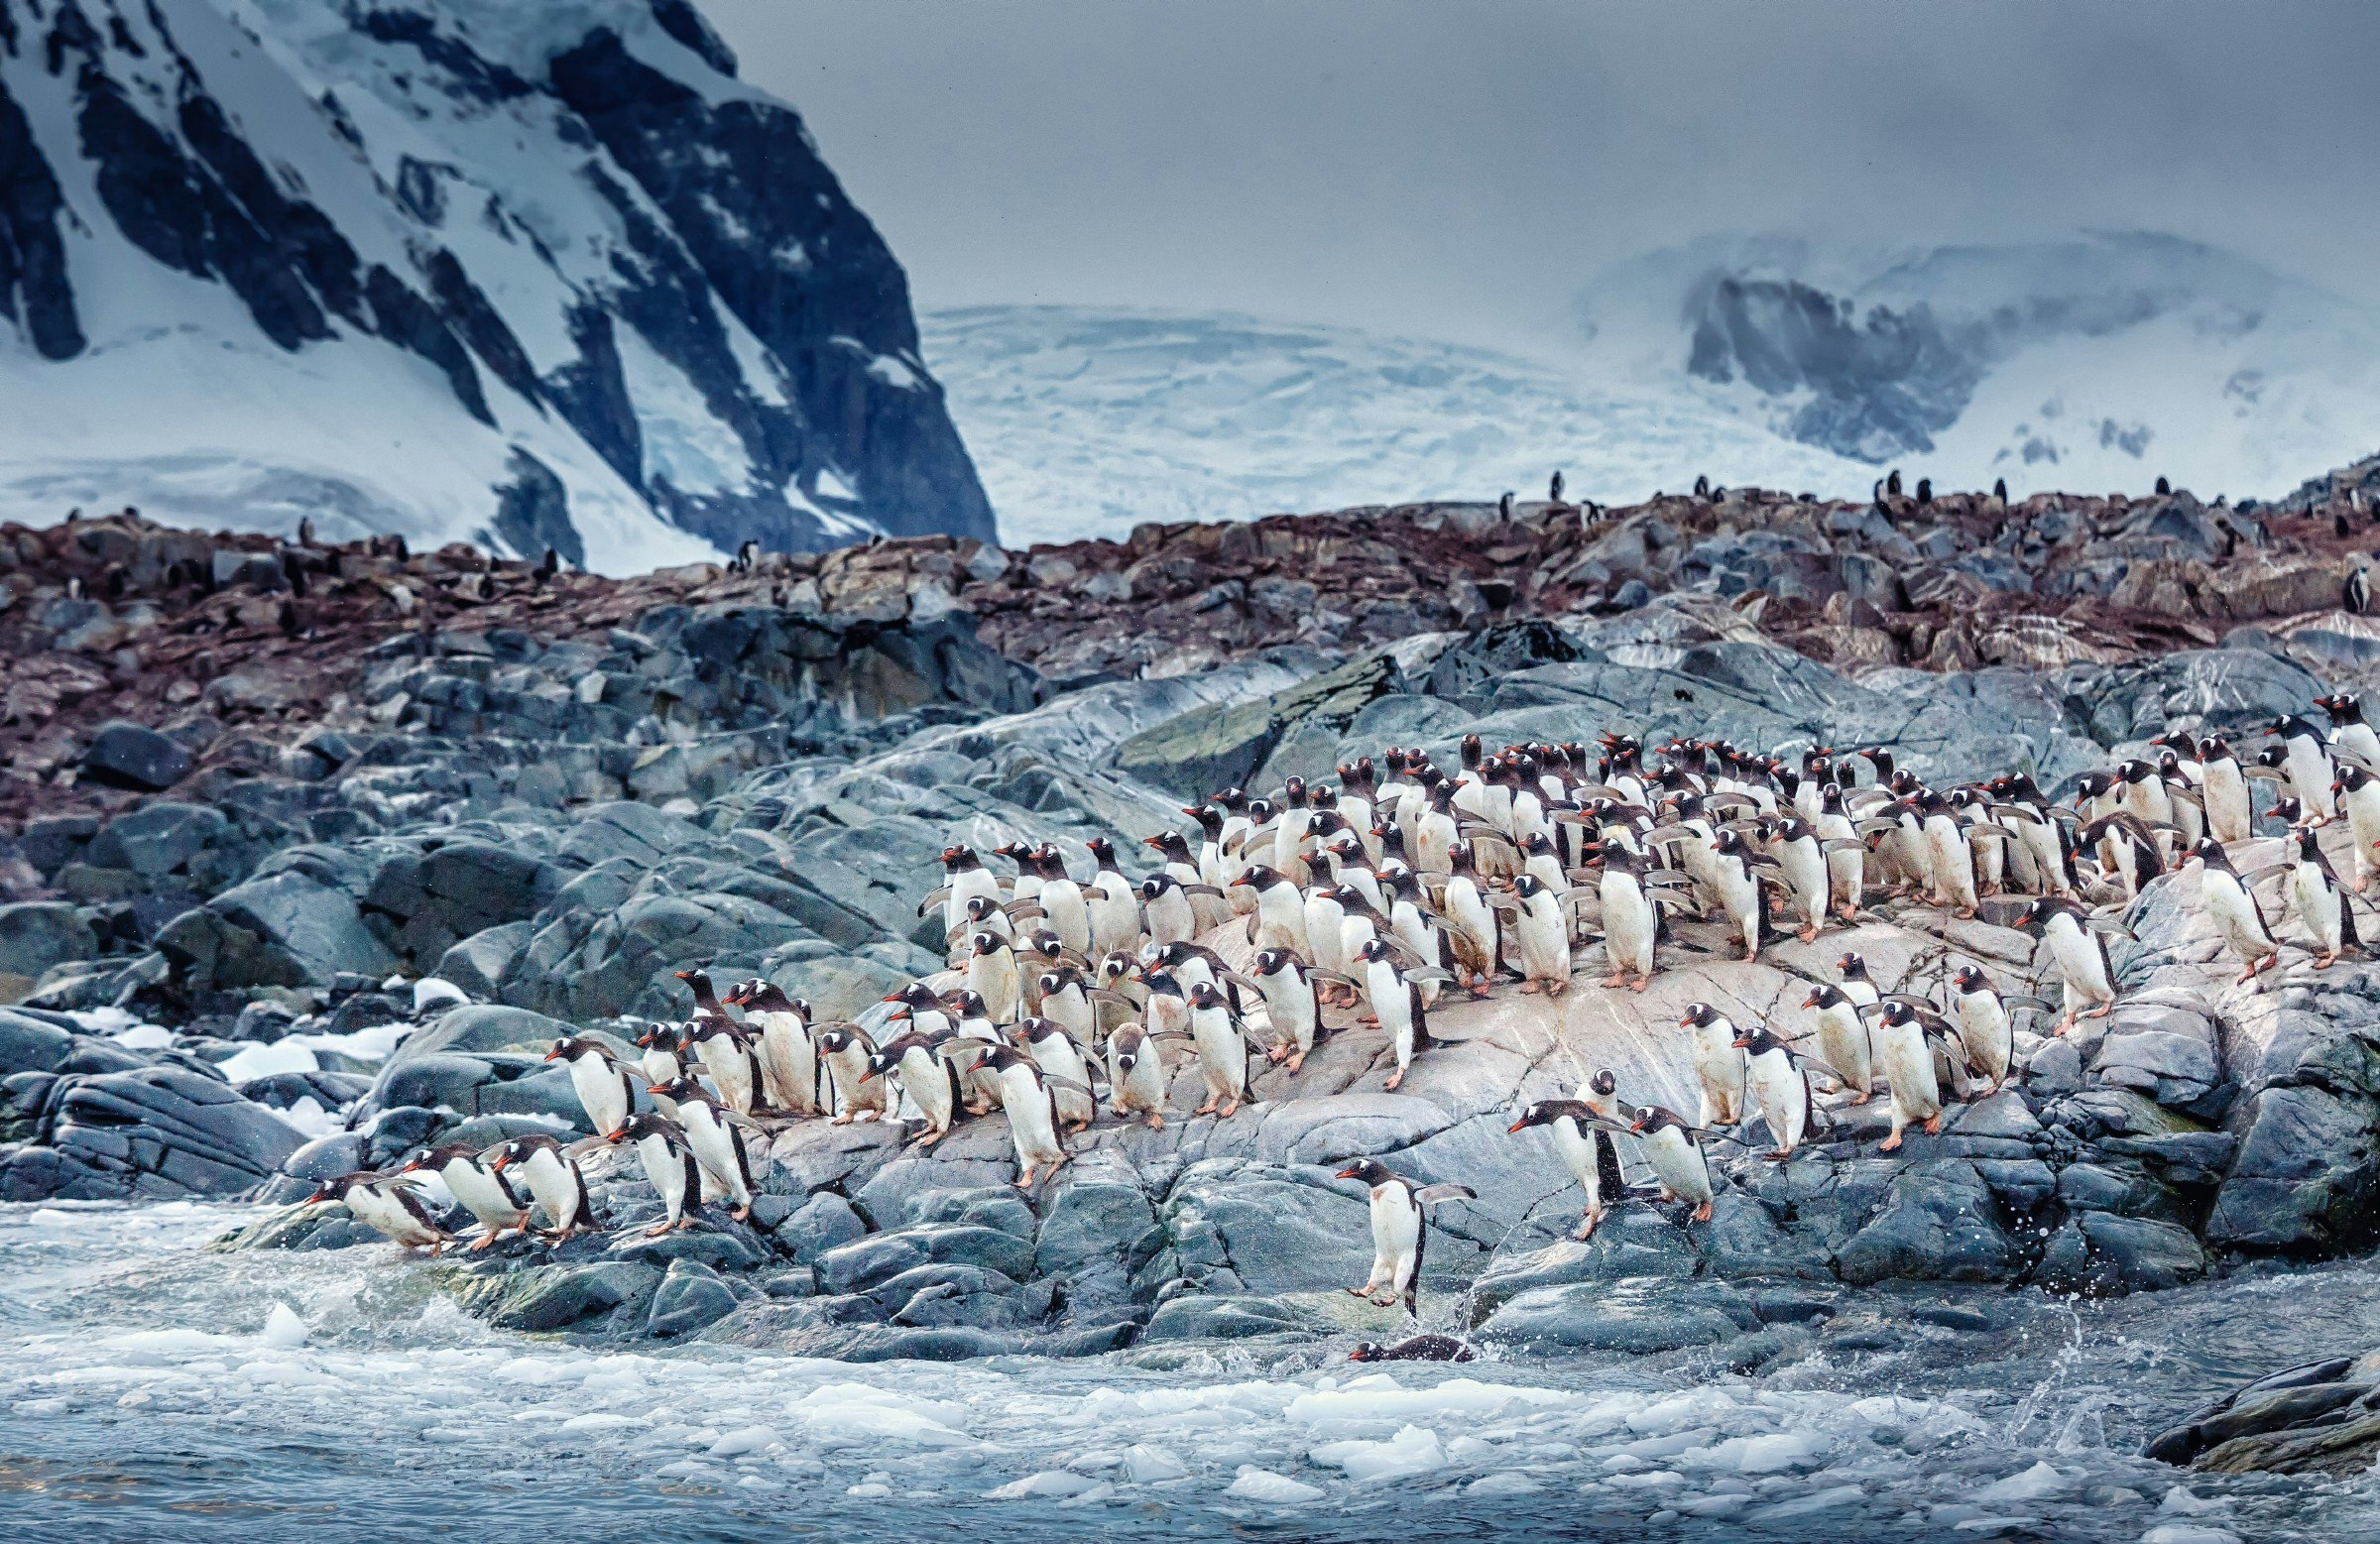 A flock of Gentoo Penguins on the rocks in Antarctica.